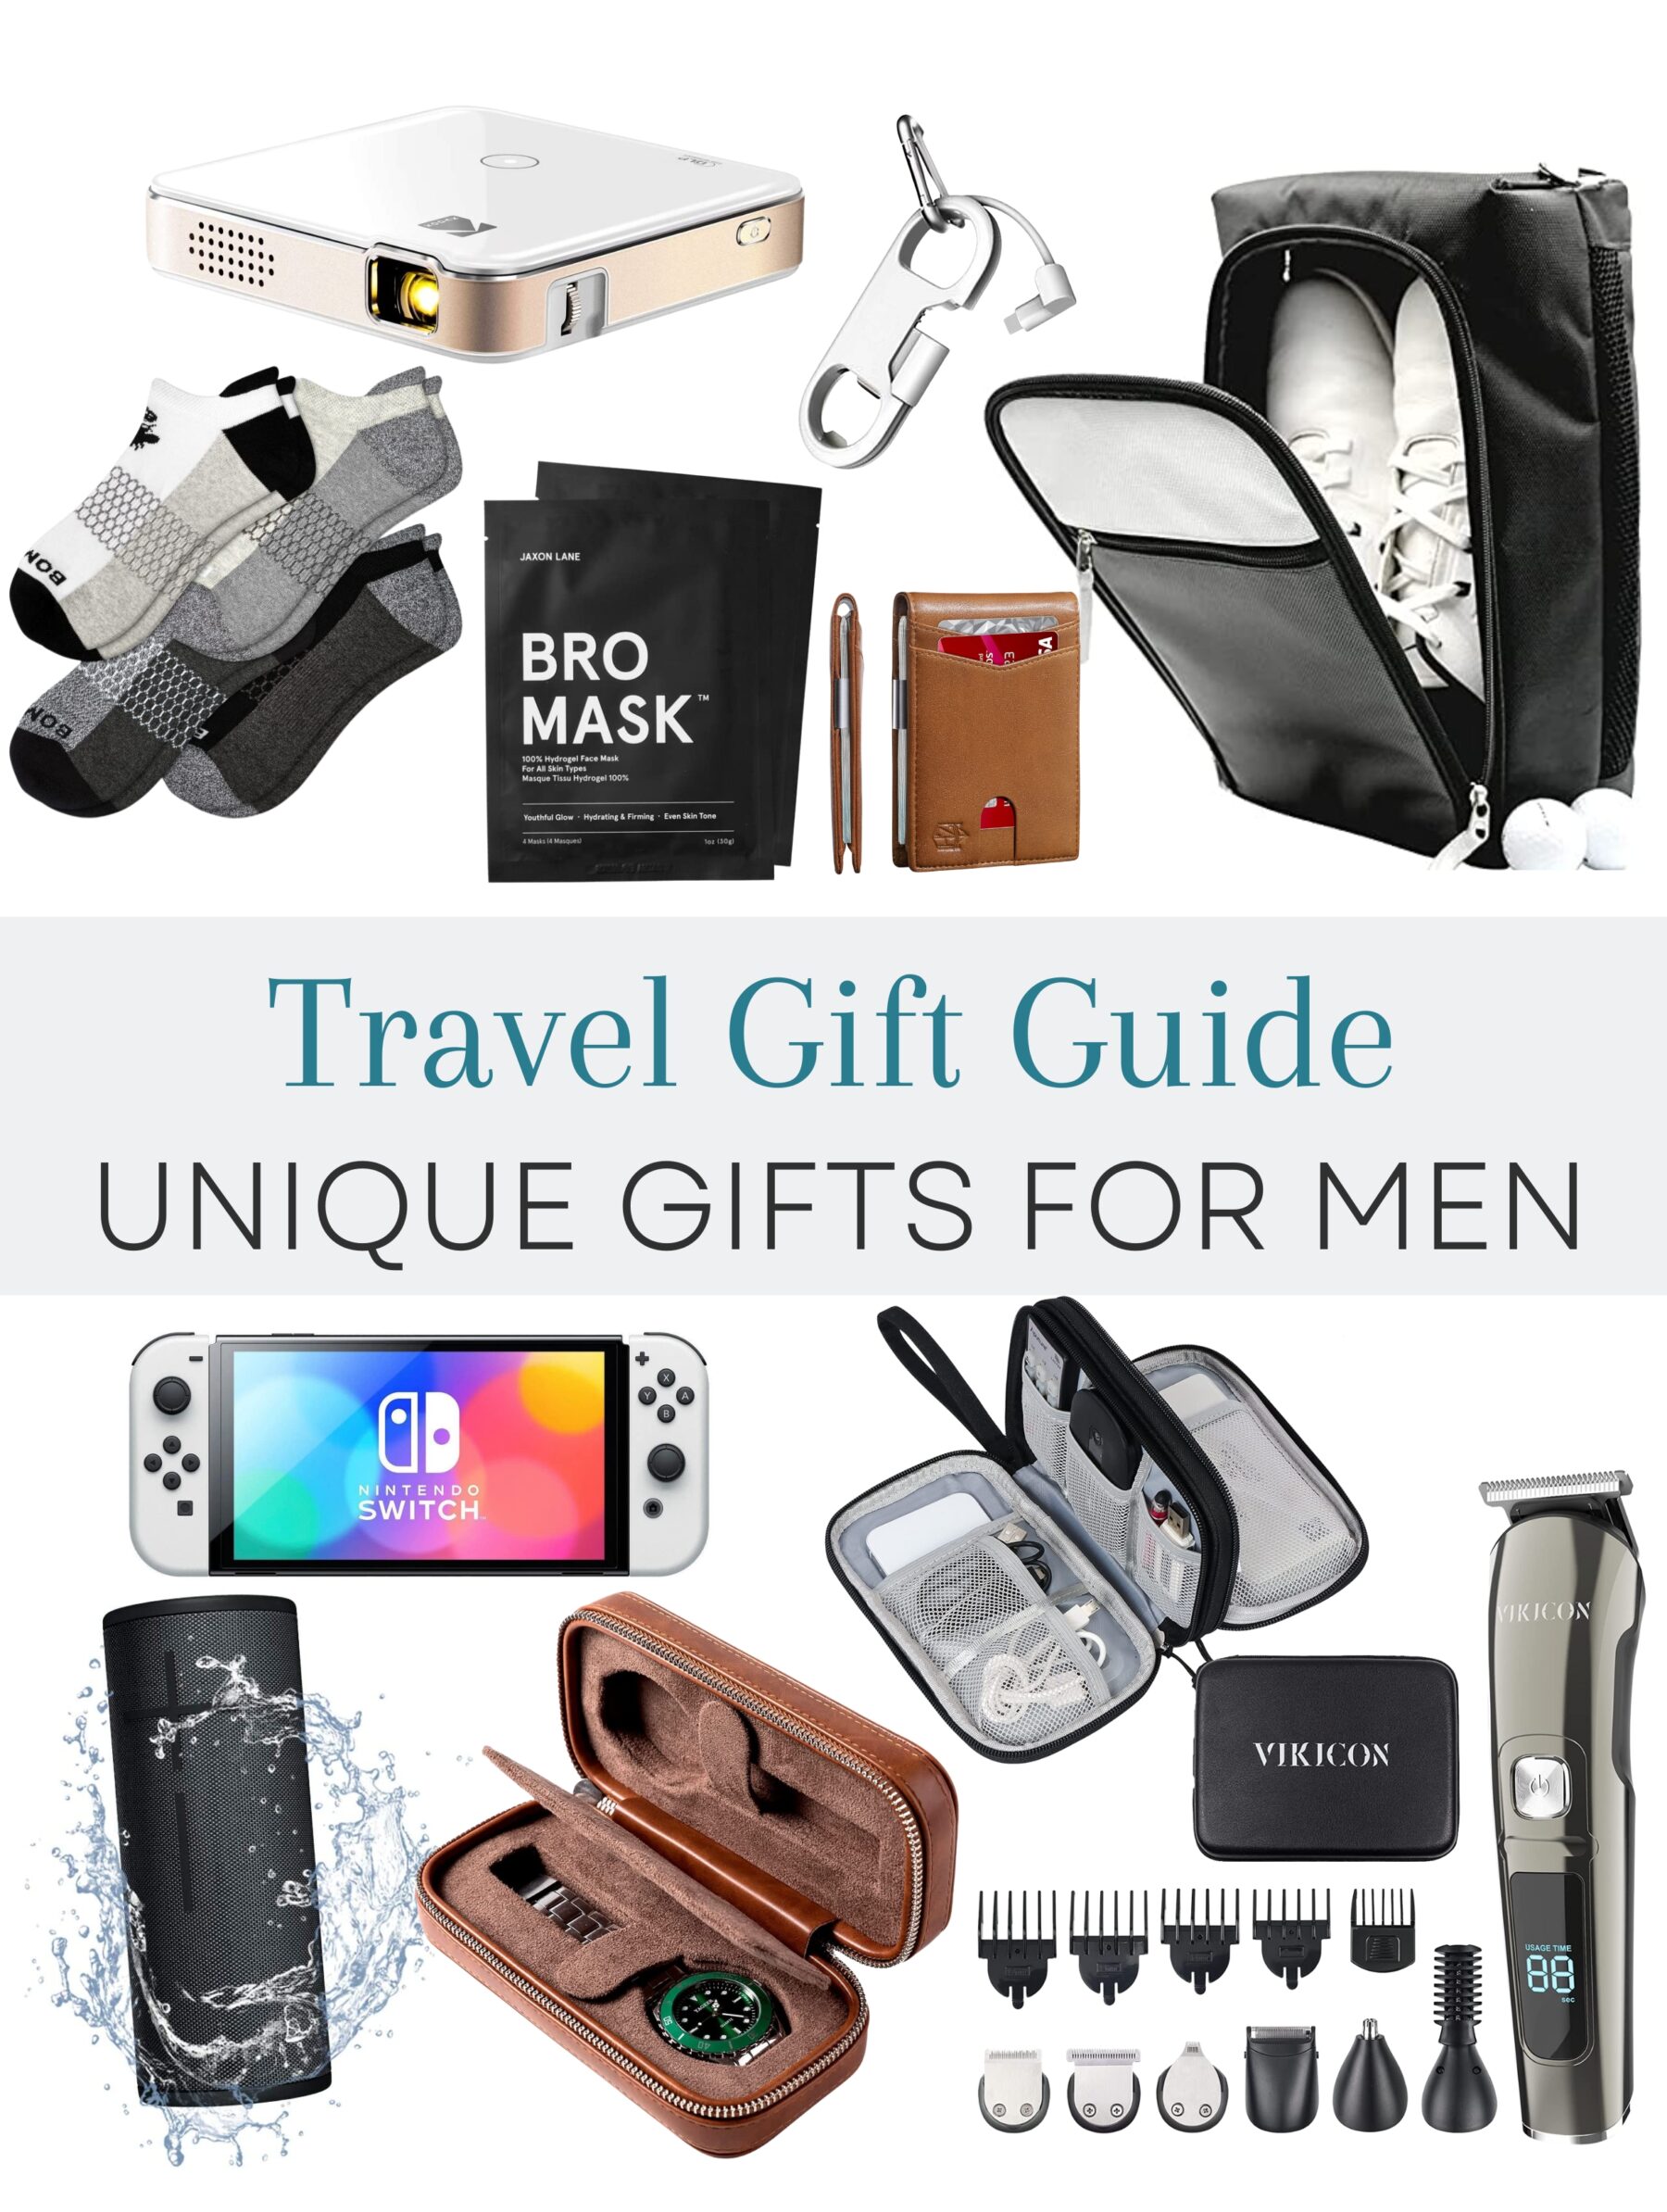 23 USEFUL travel gifts for kids - TraveLynn Family